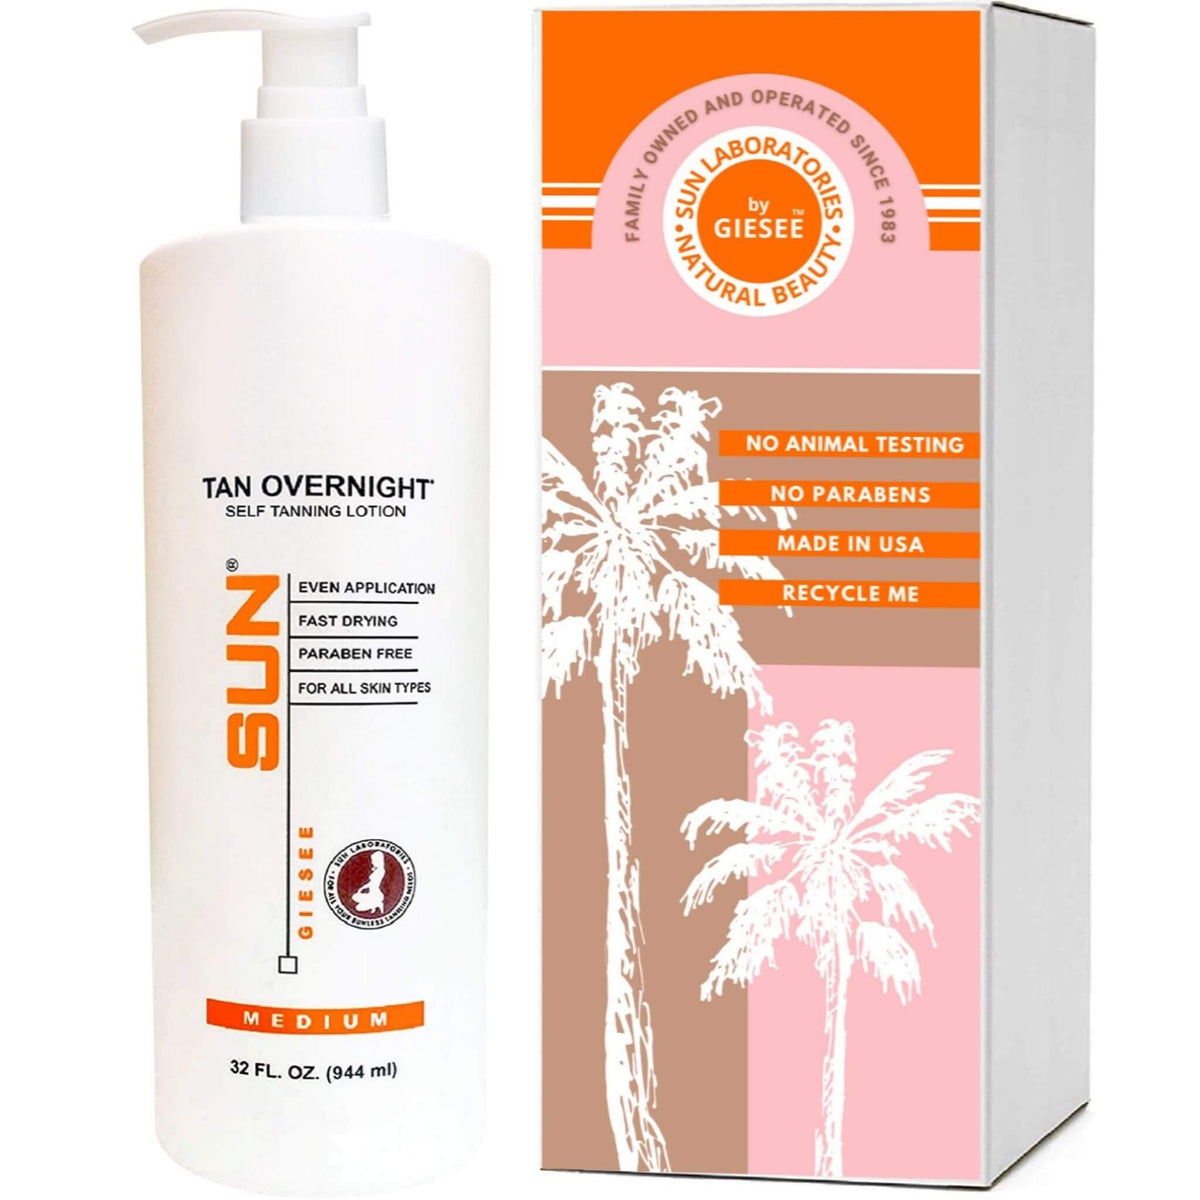 Sun Laboratories Tan Overnight Self TanningLotion